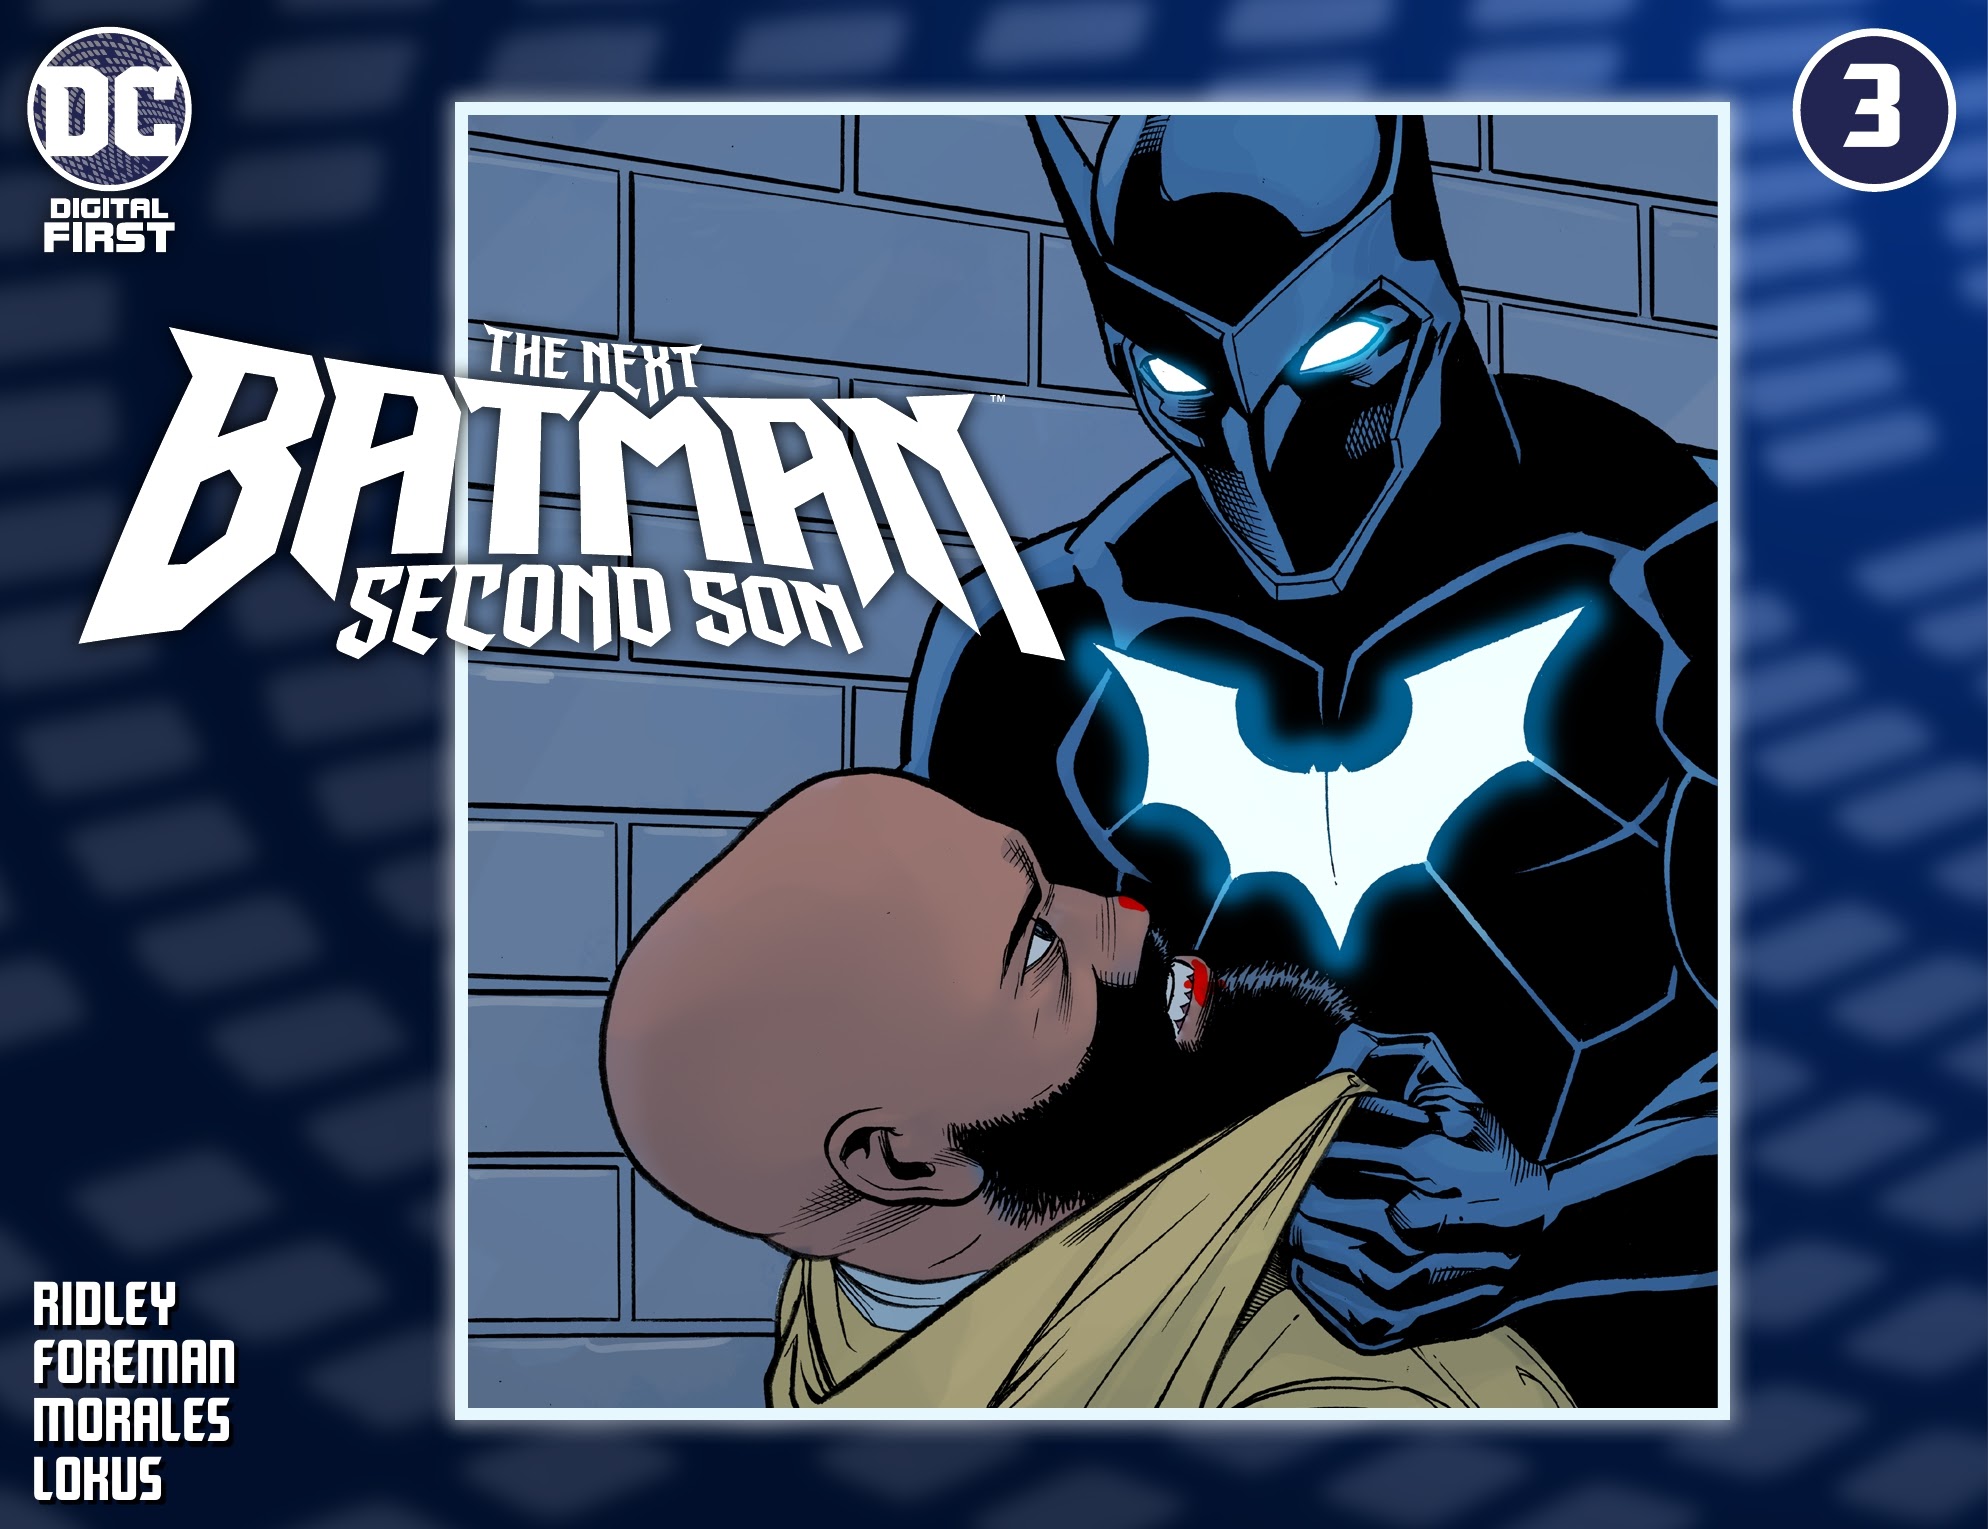 Read online The Next Batman: Second Son comic -  Issue #3 - 1